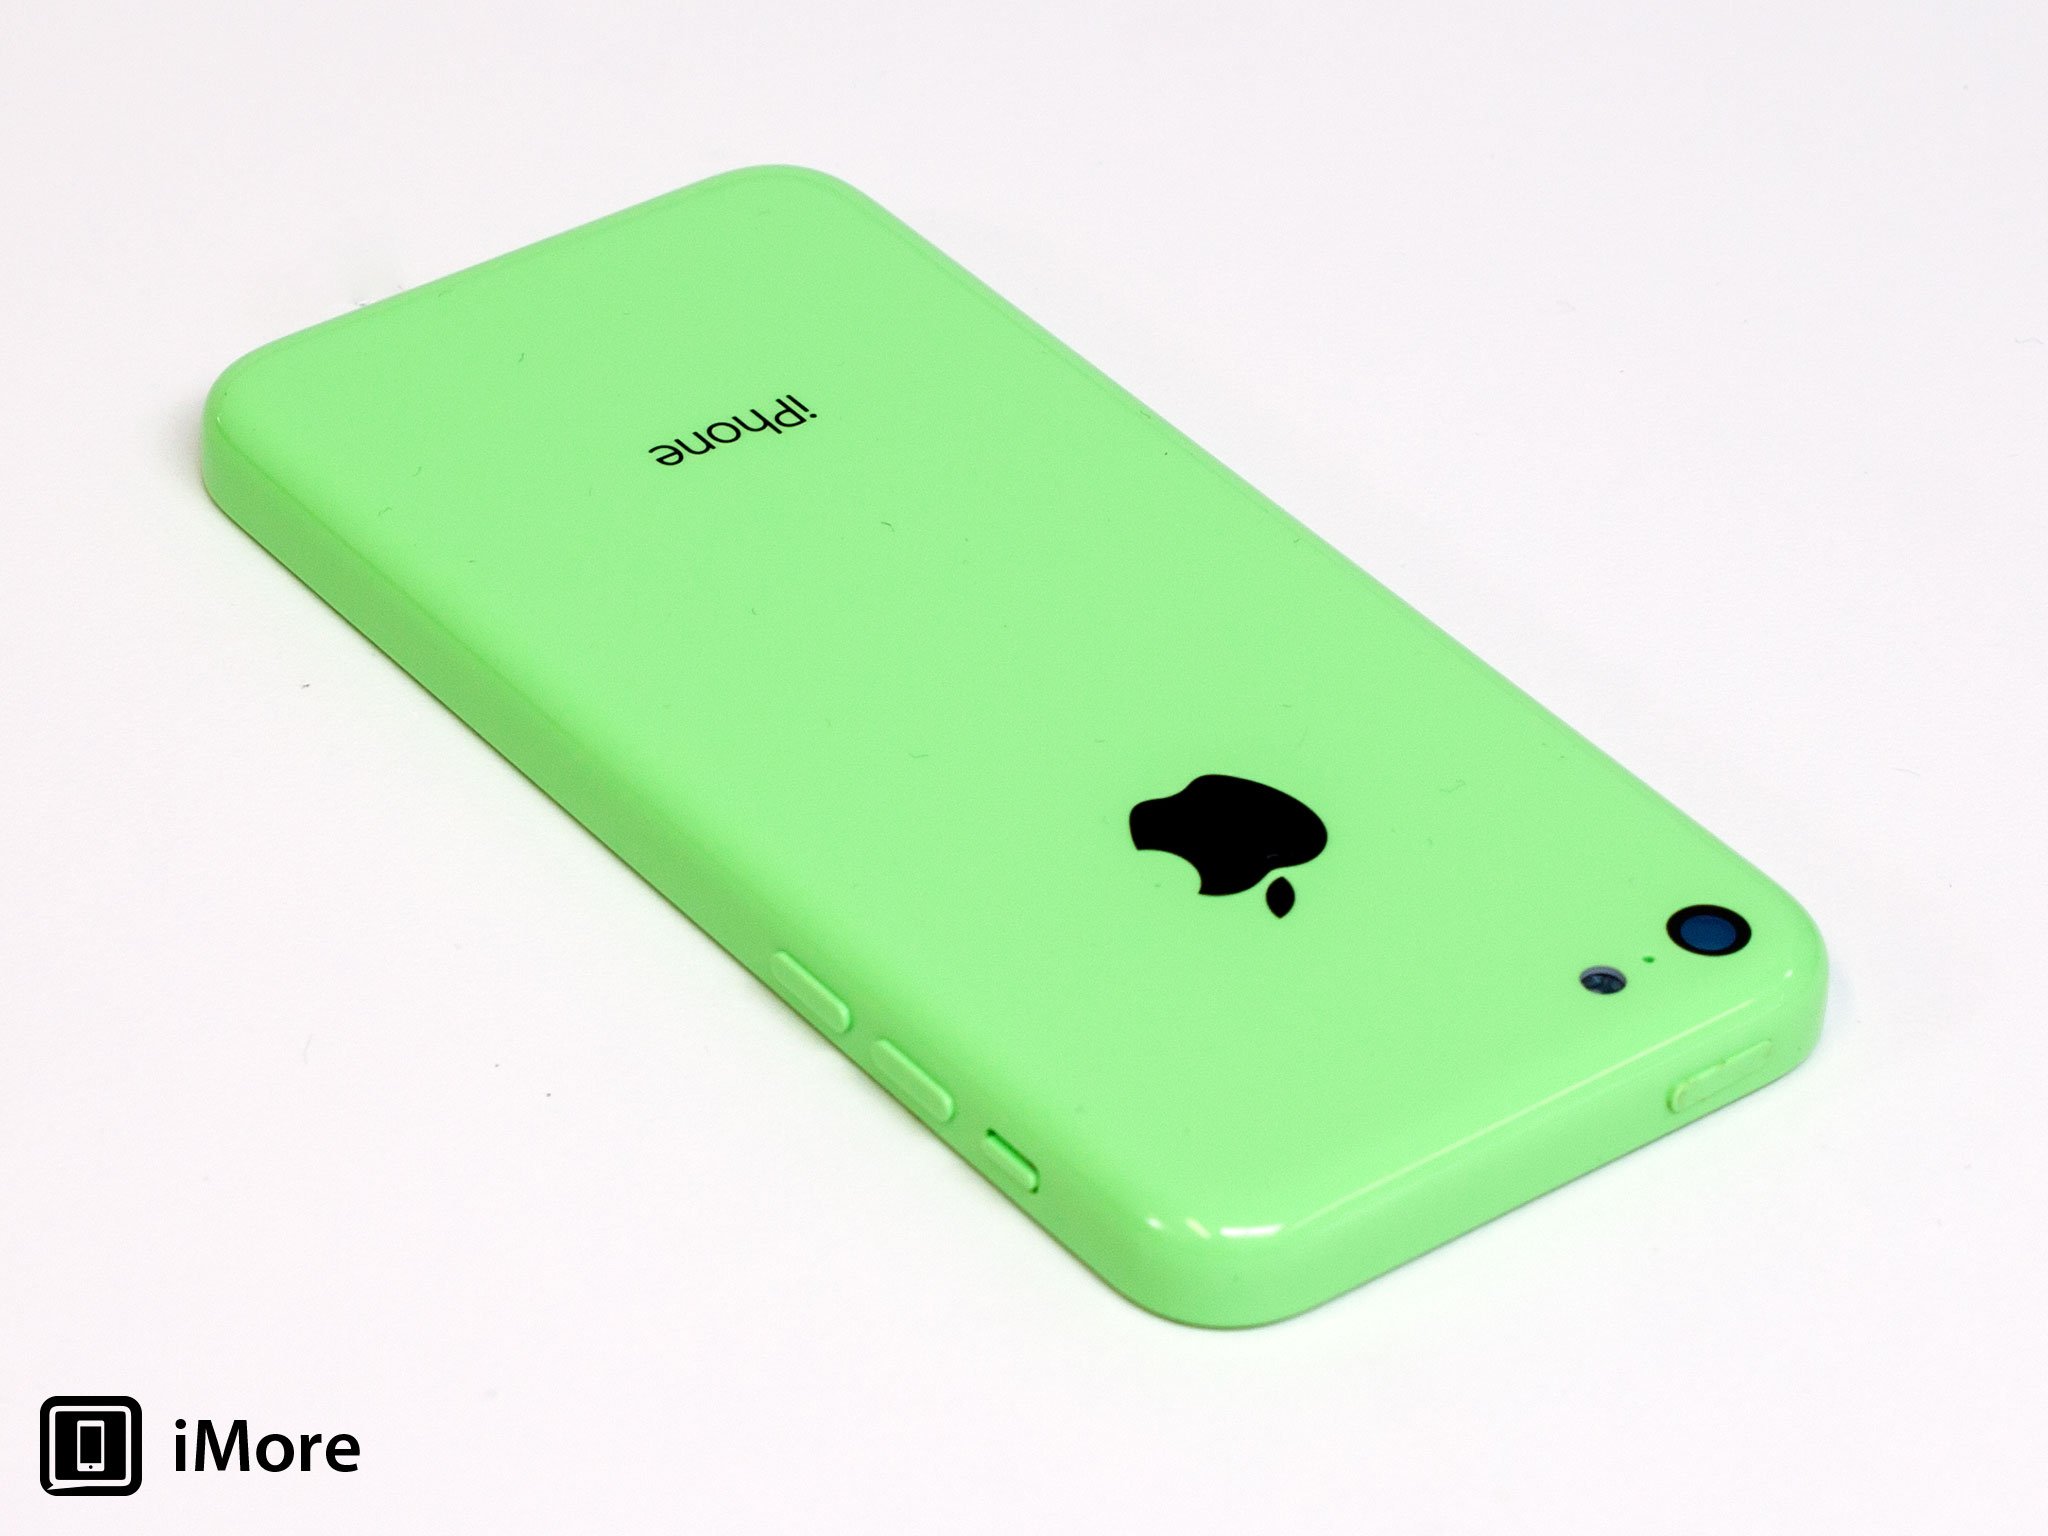 iPhone 5c green case leak